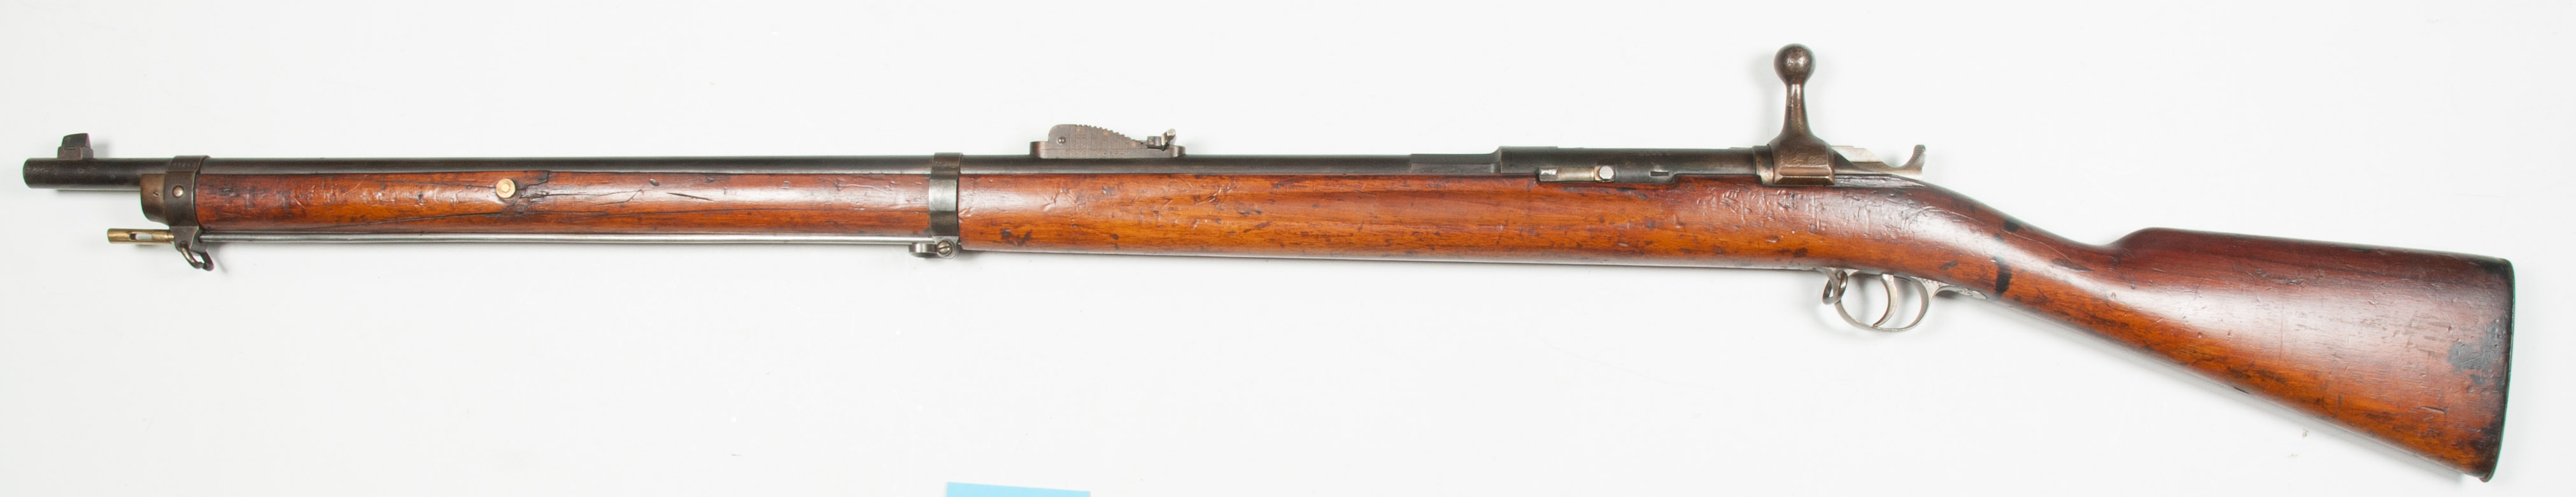 ./guns/rifle/bilder/Rifle-Kongsberg-Jarmann-M1884-11285-2.jpg